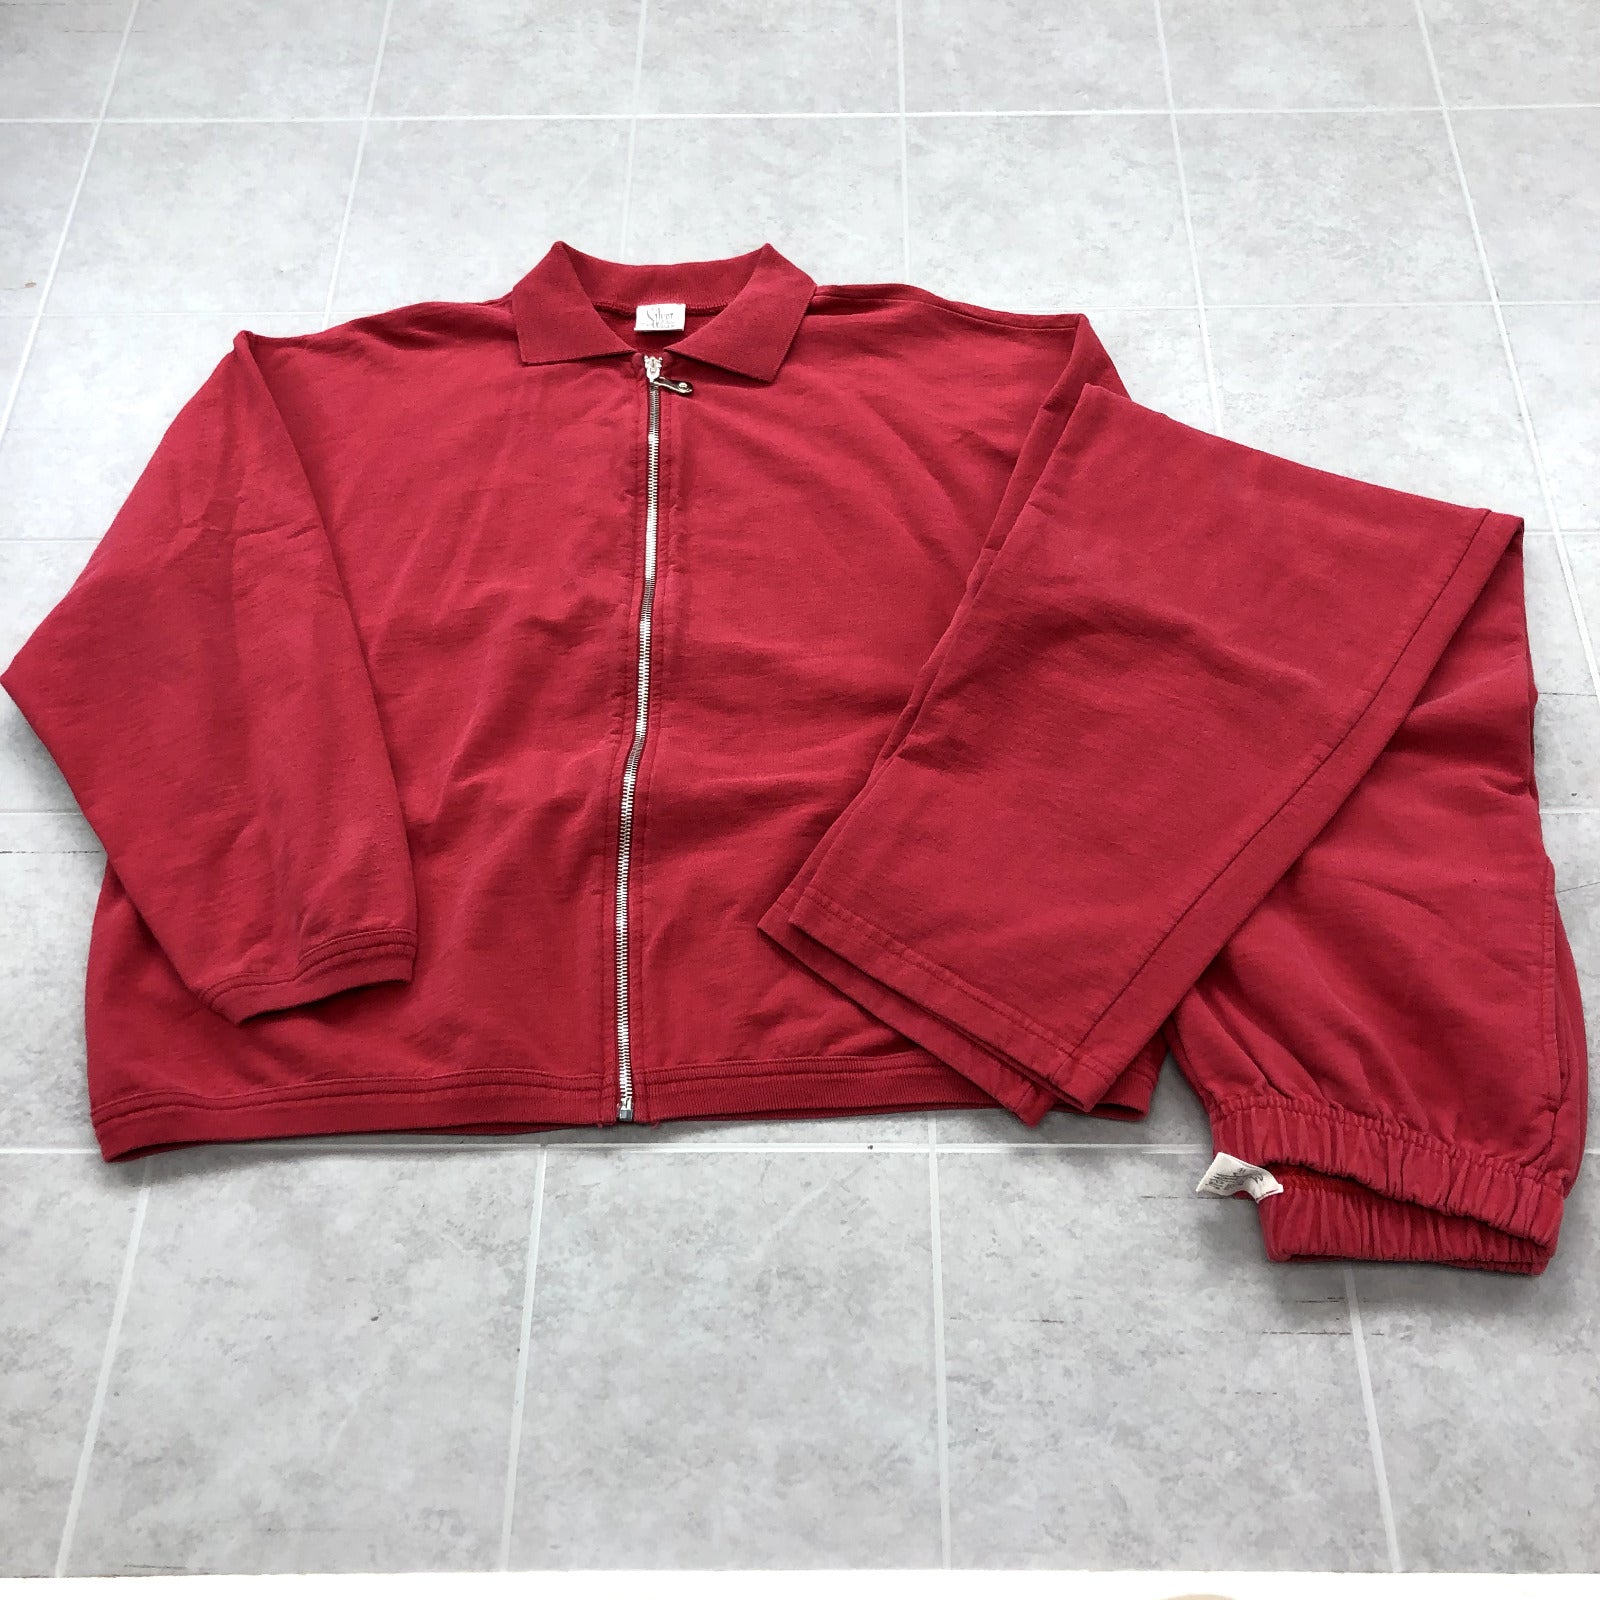 Vintage Silver Wear Red Full-Zip Collared Sweatshirt Set Adult Size XL